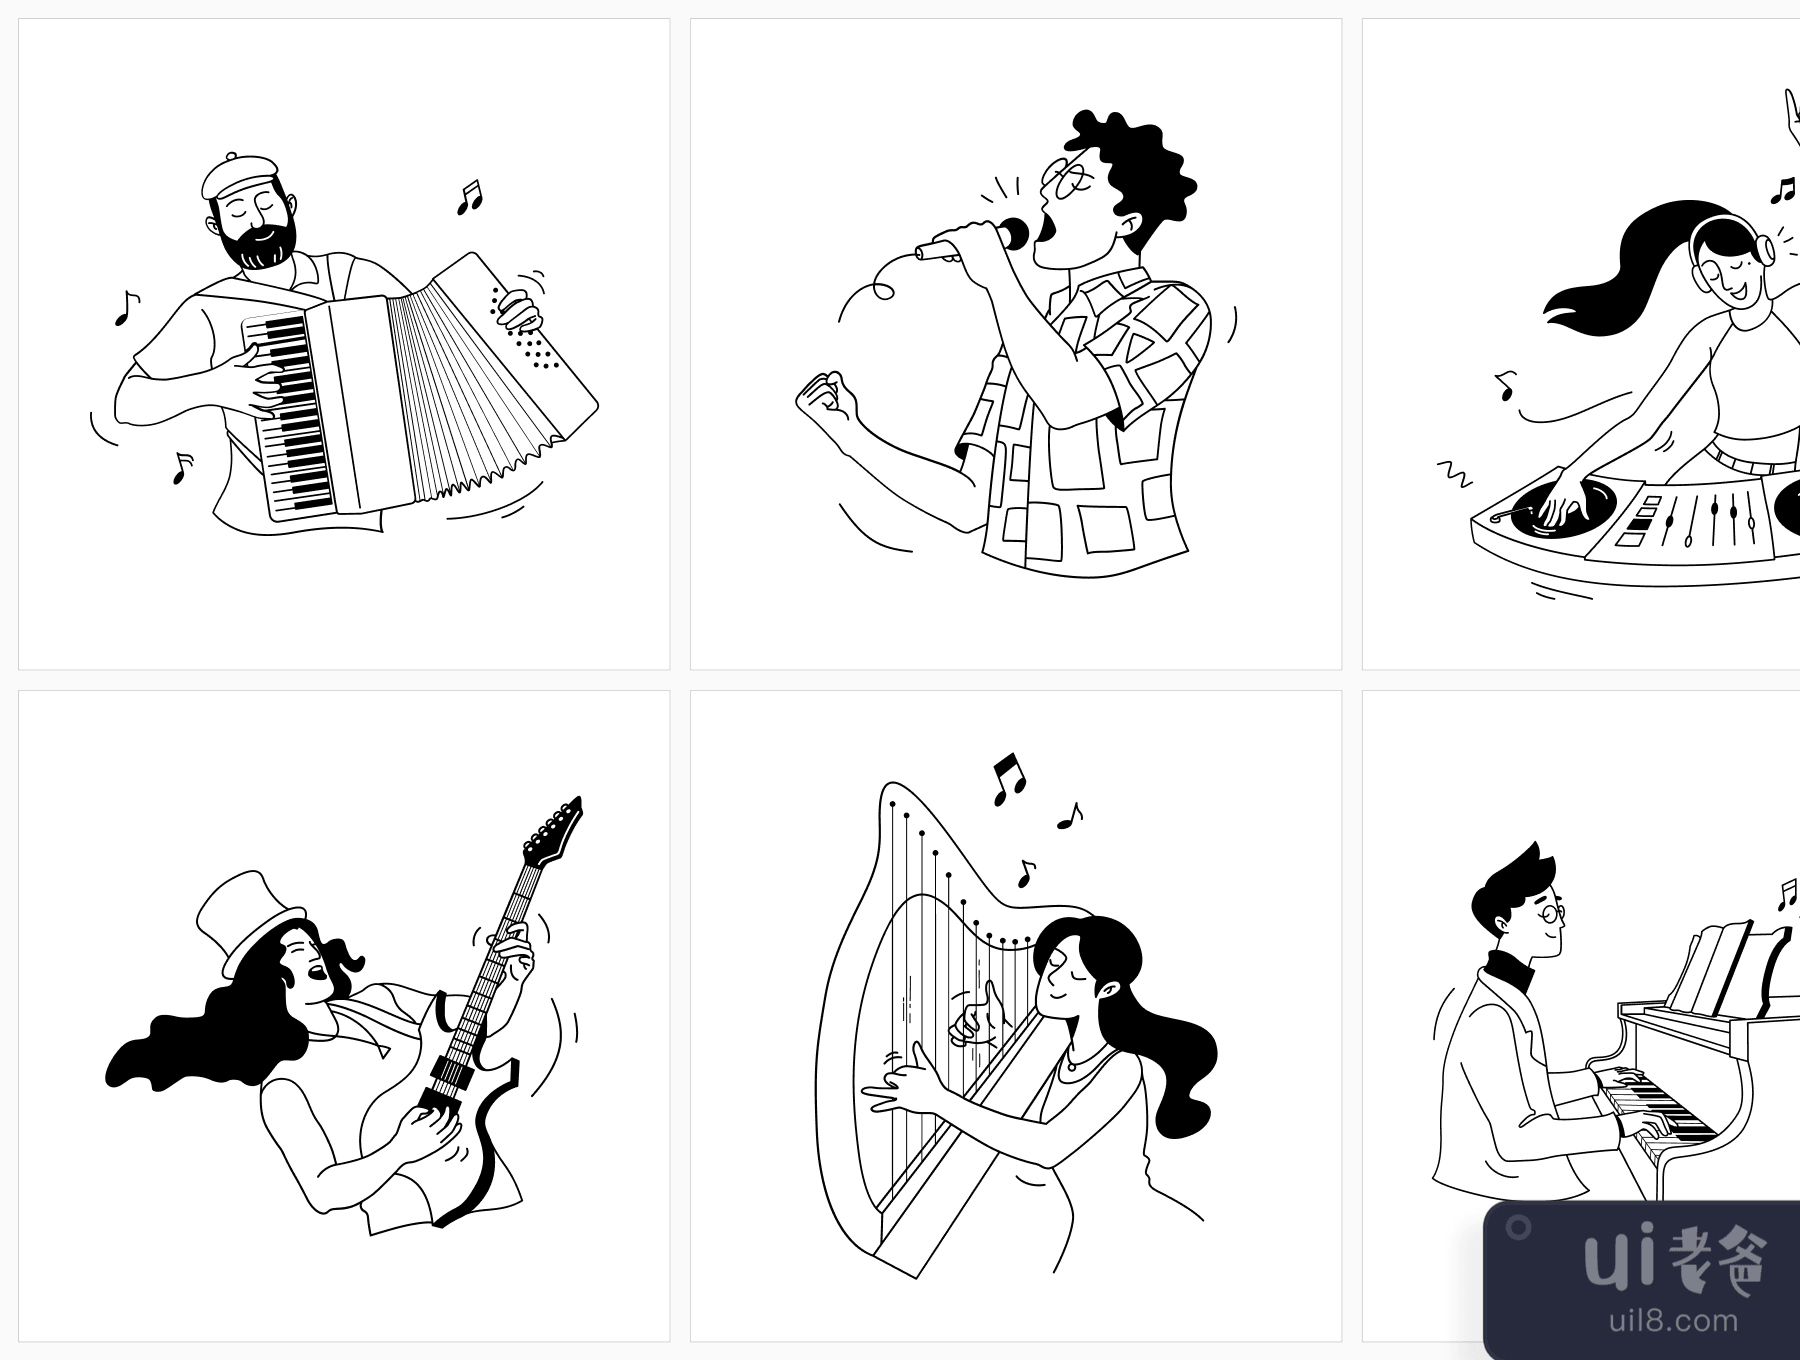 Musicy - 艺术家 - 音乐家插图 (Musicy - Artist - Musician Illustrations)插图6